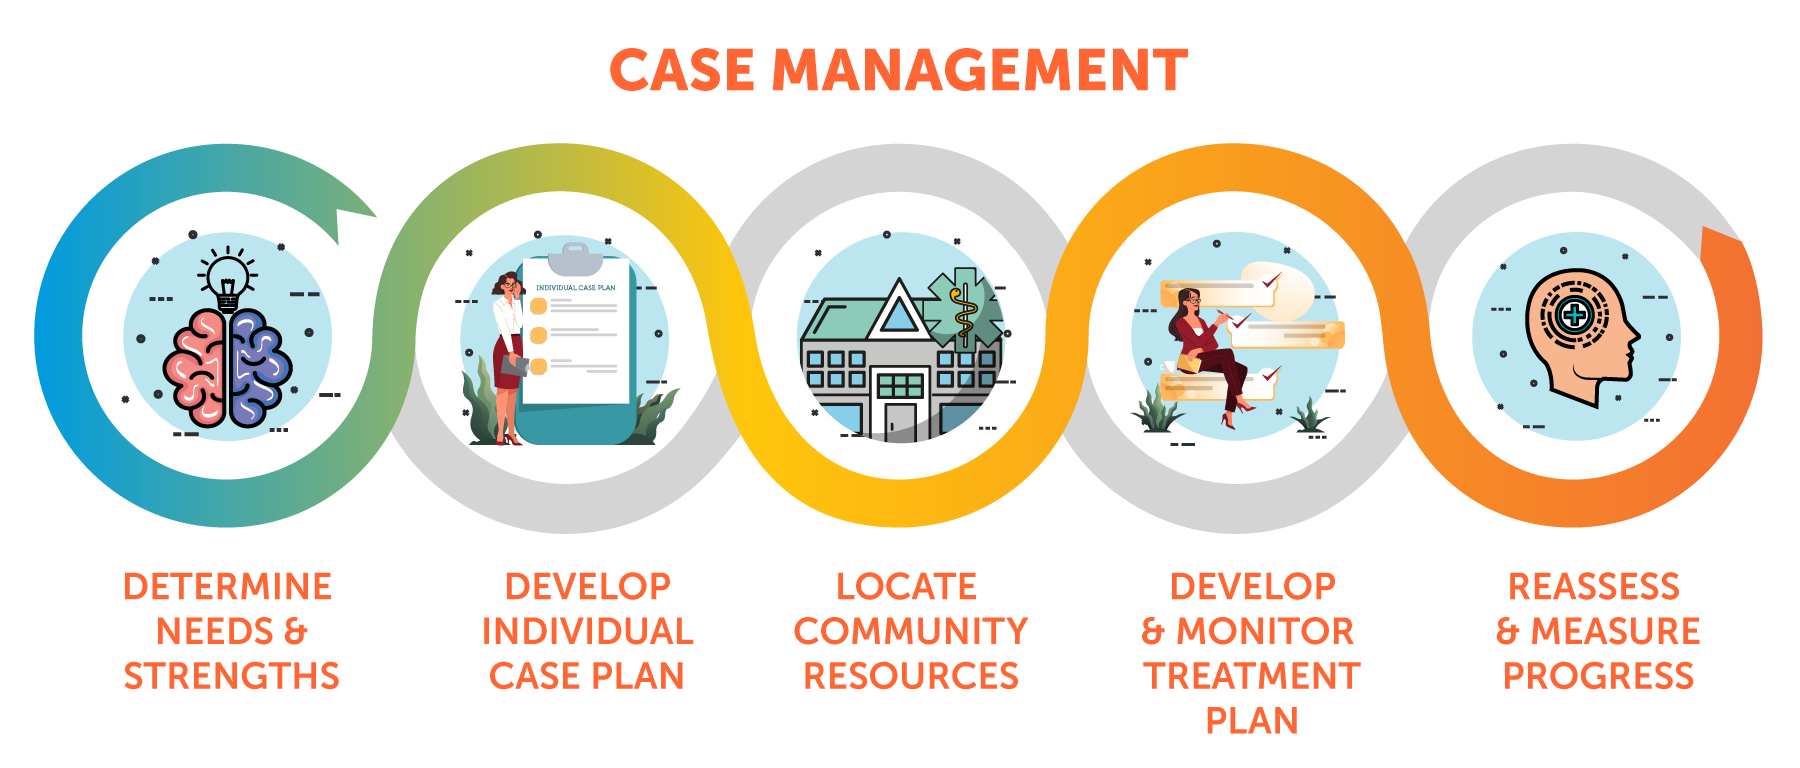 Targeted Case Management Plan